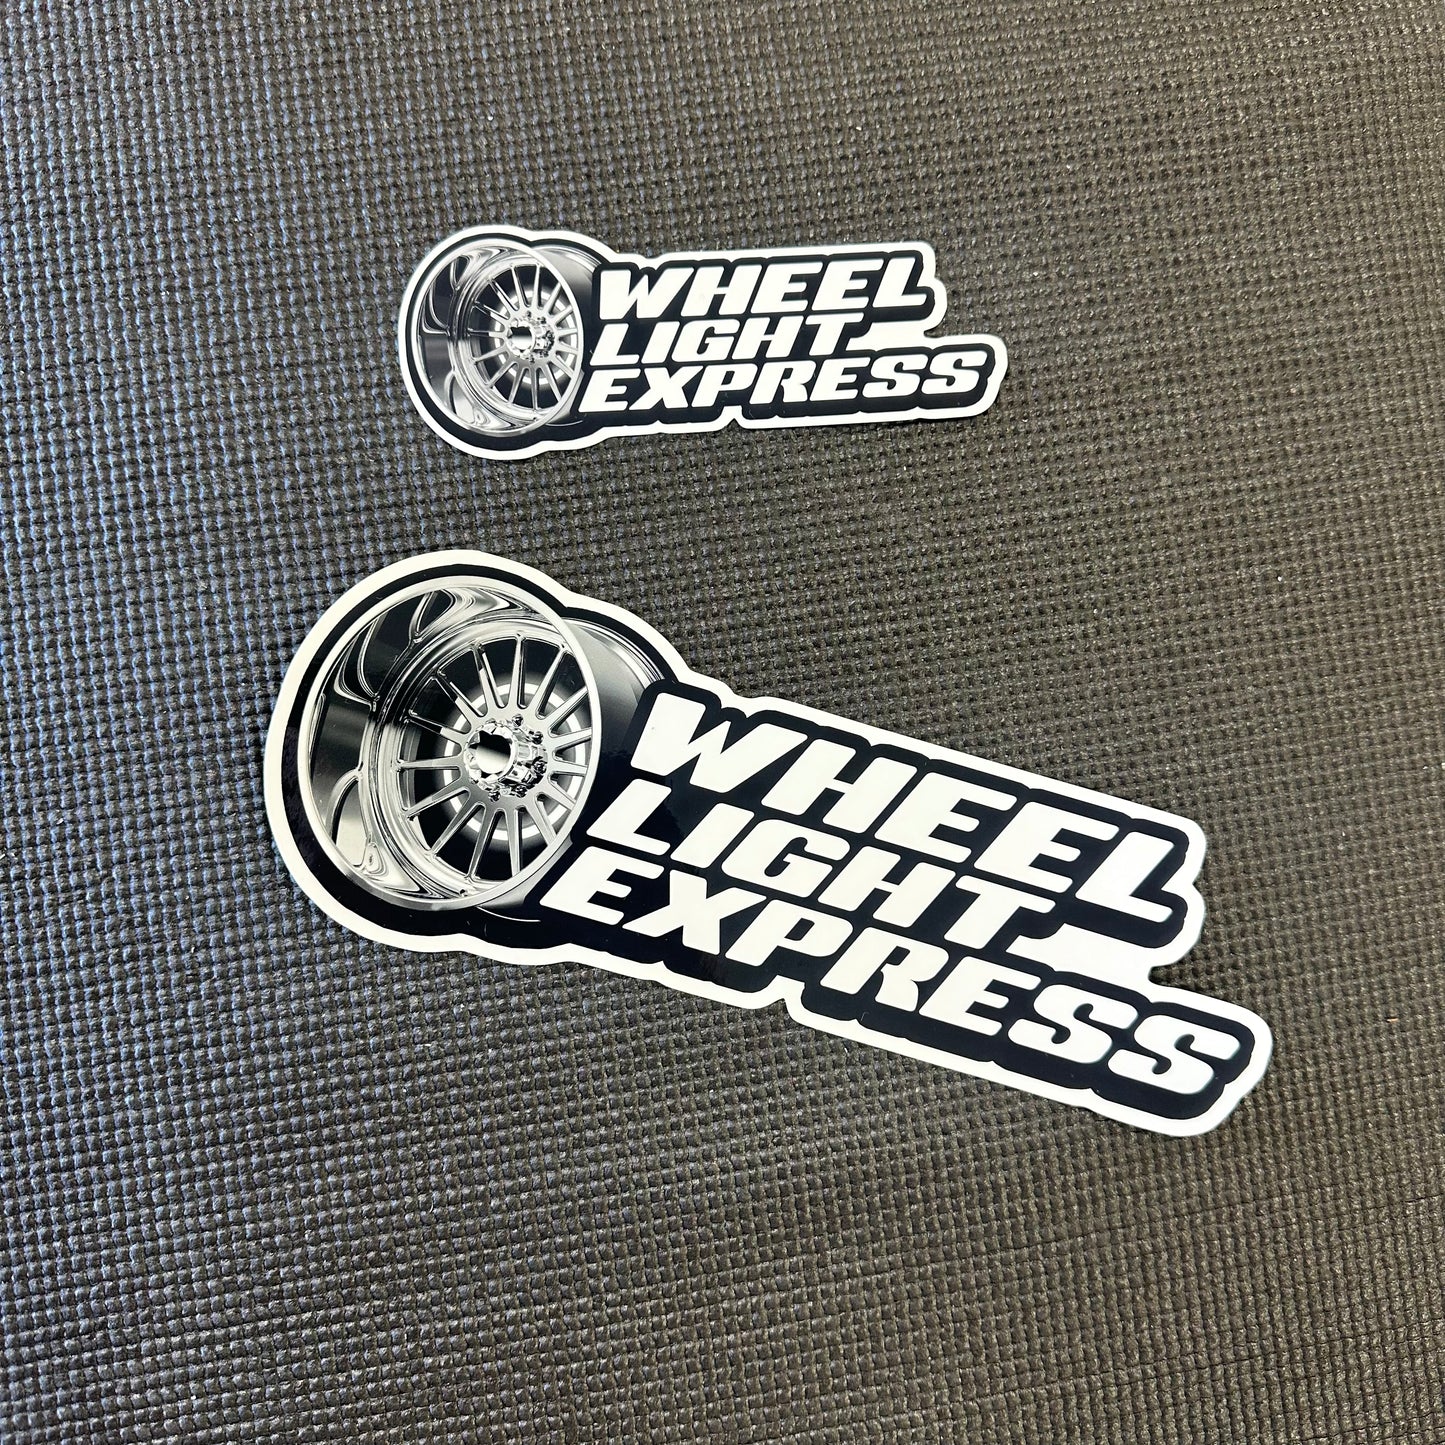 Die Cut Wheel Light Express Sticker